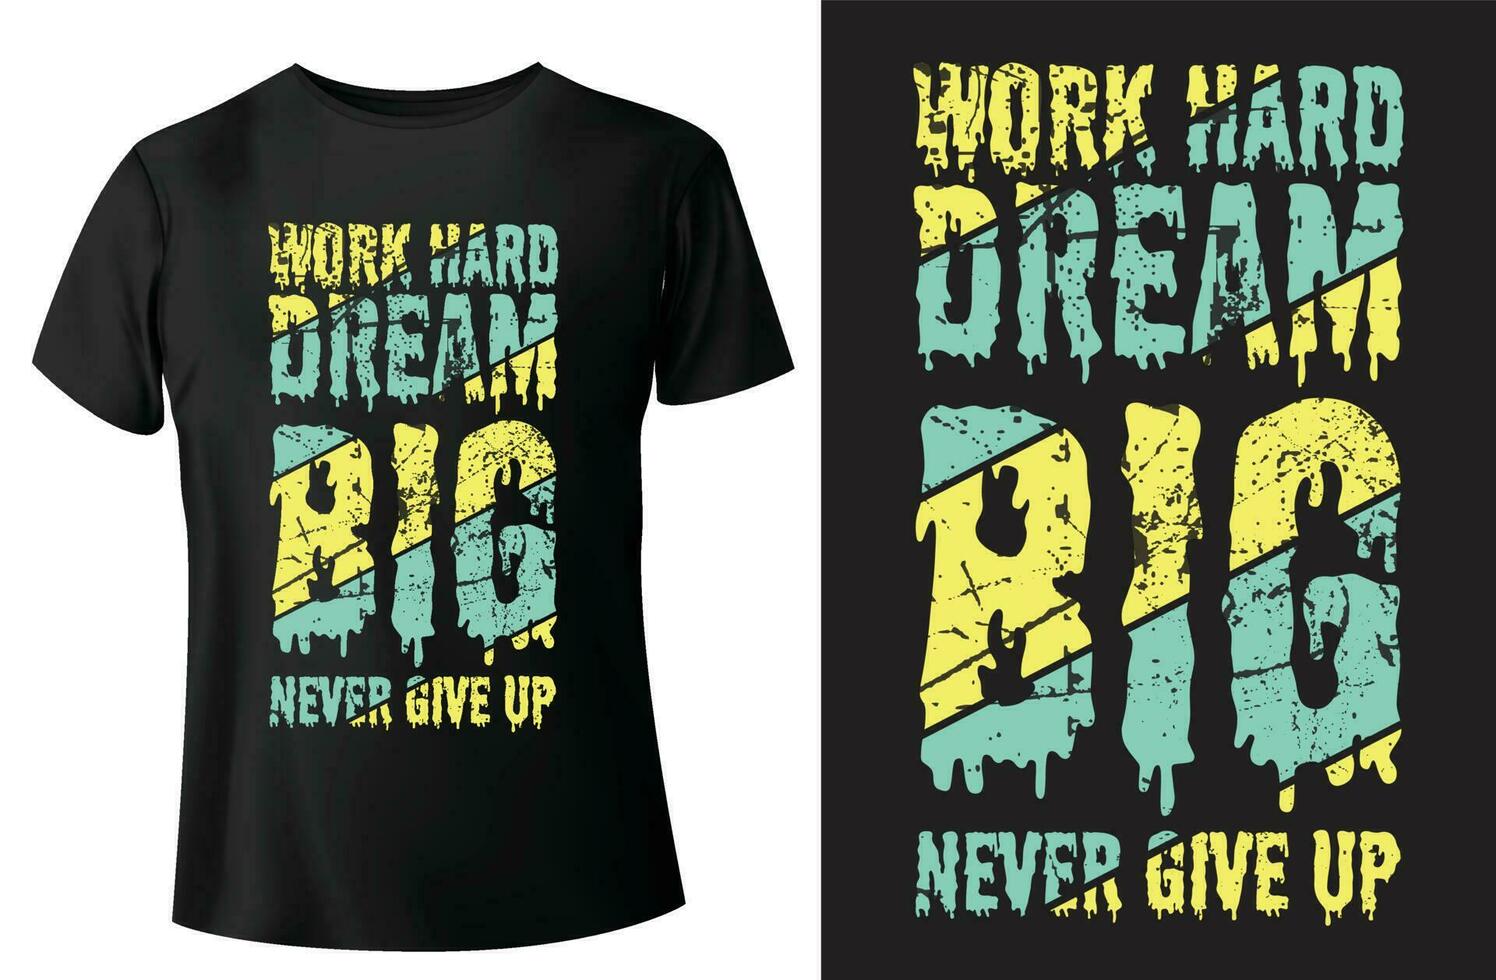 arbete hård dröm stor aldrig ge upp Citat motiverande letering typografi t-shirt design vektor